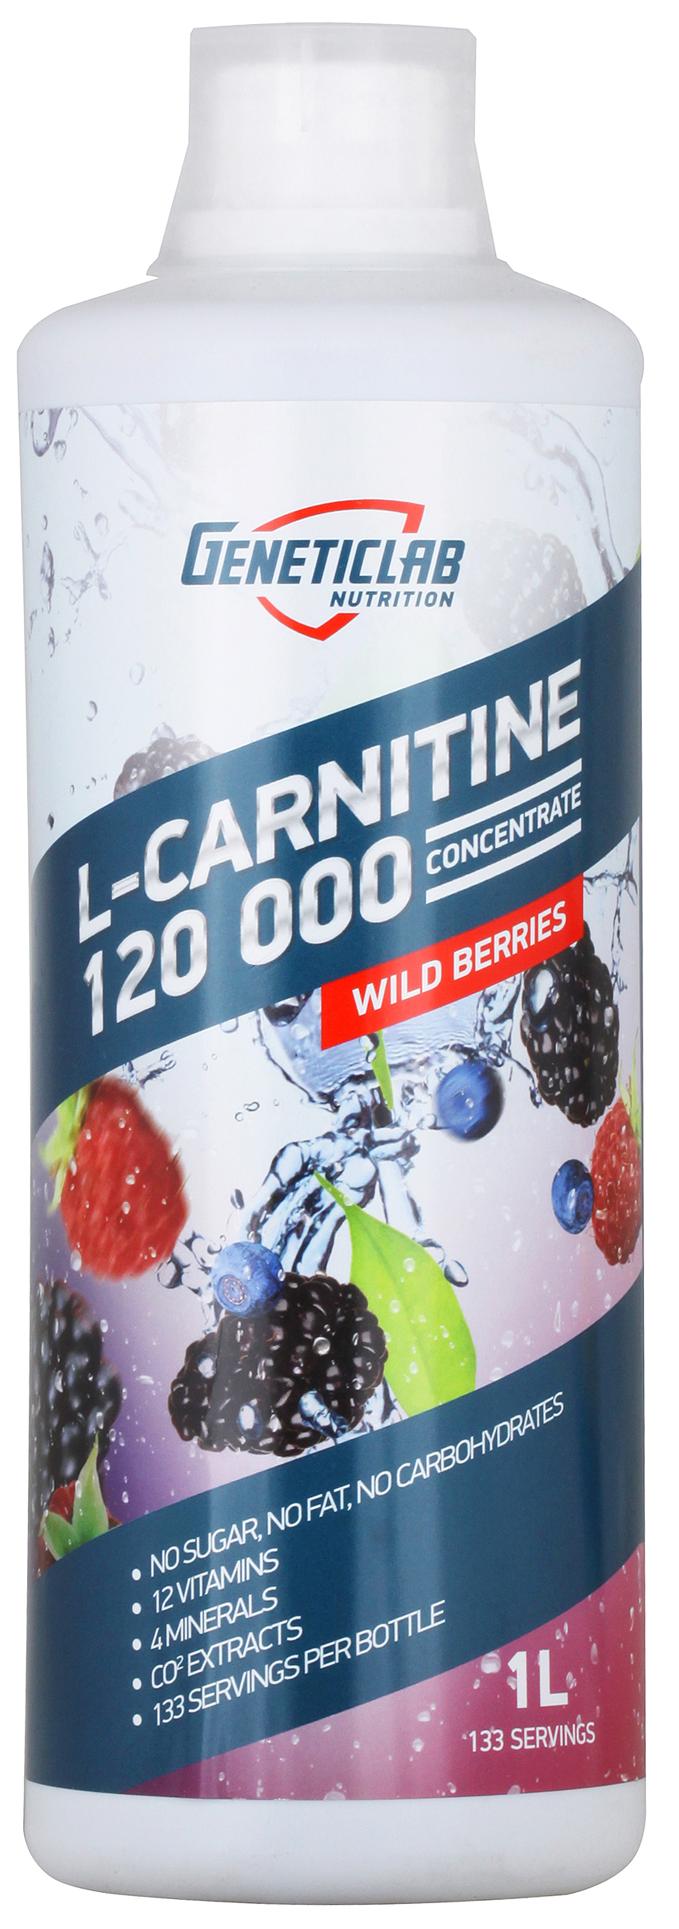 L-Carnitine 120 000  сoncentrate, вкус лесные ягоды, 1 л, Geneticlab